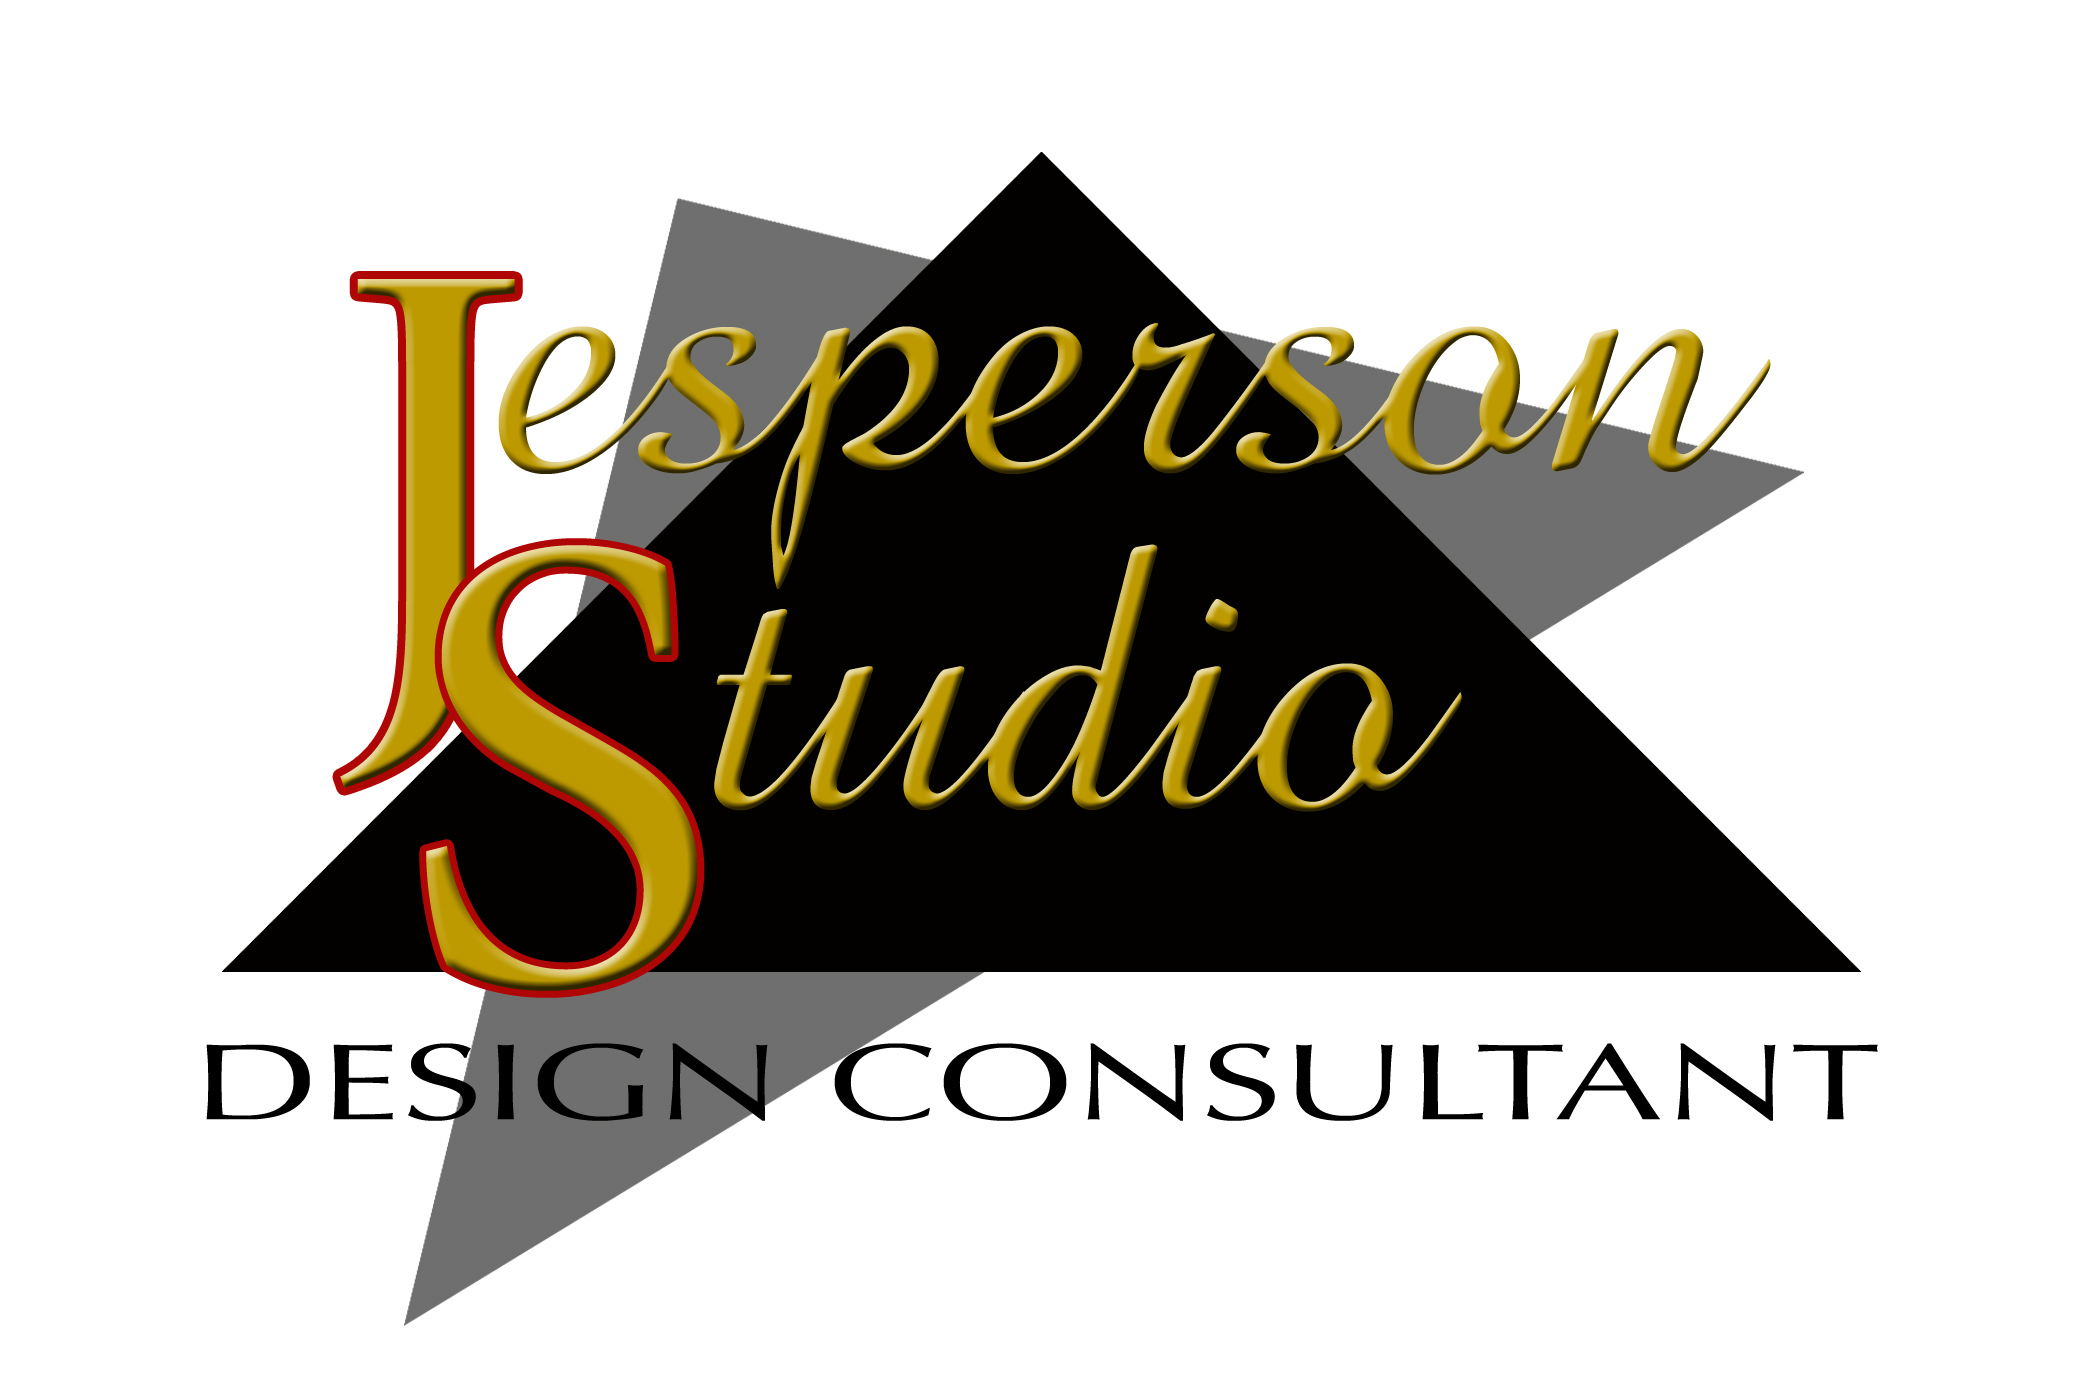 Jesperson Studios